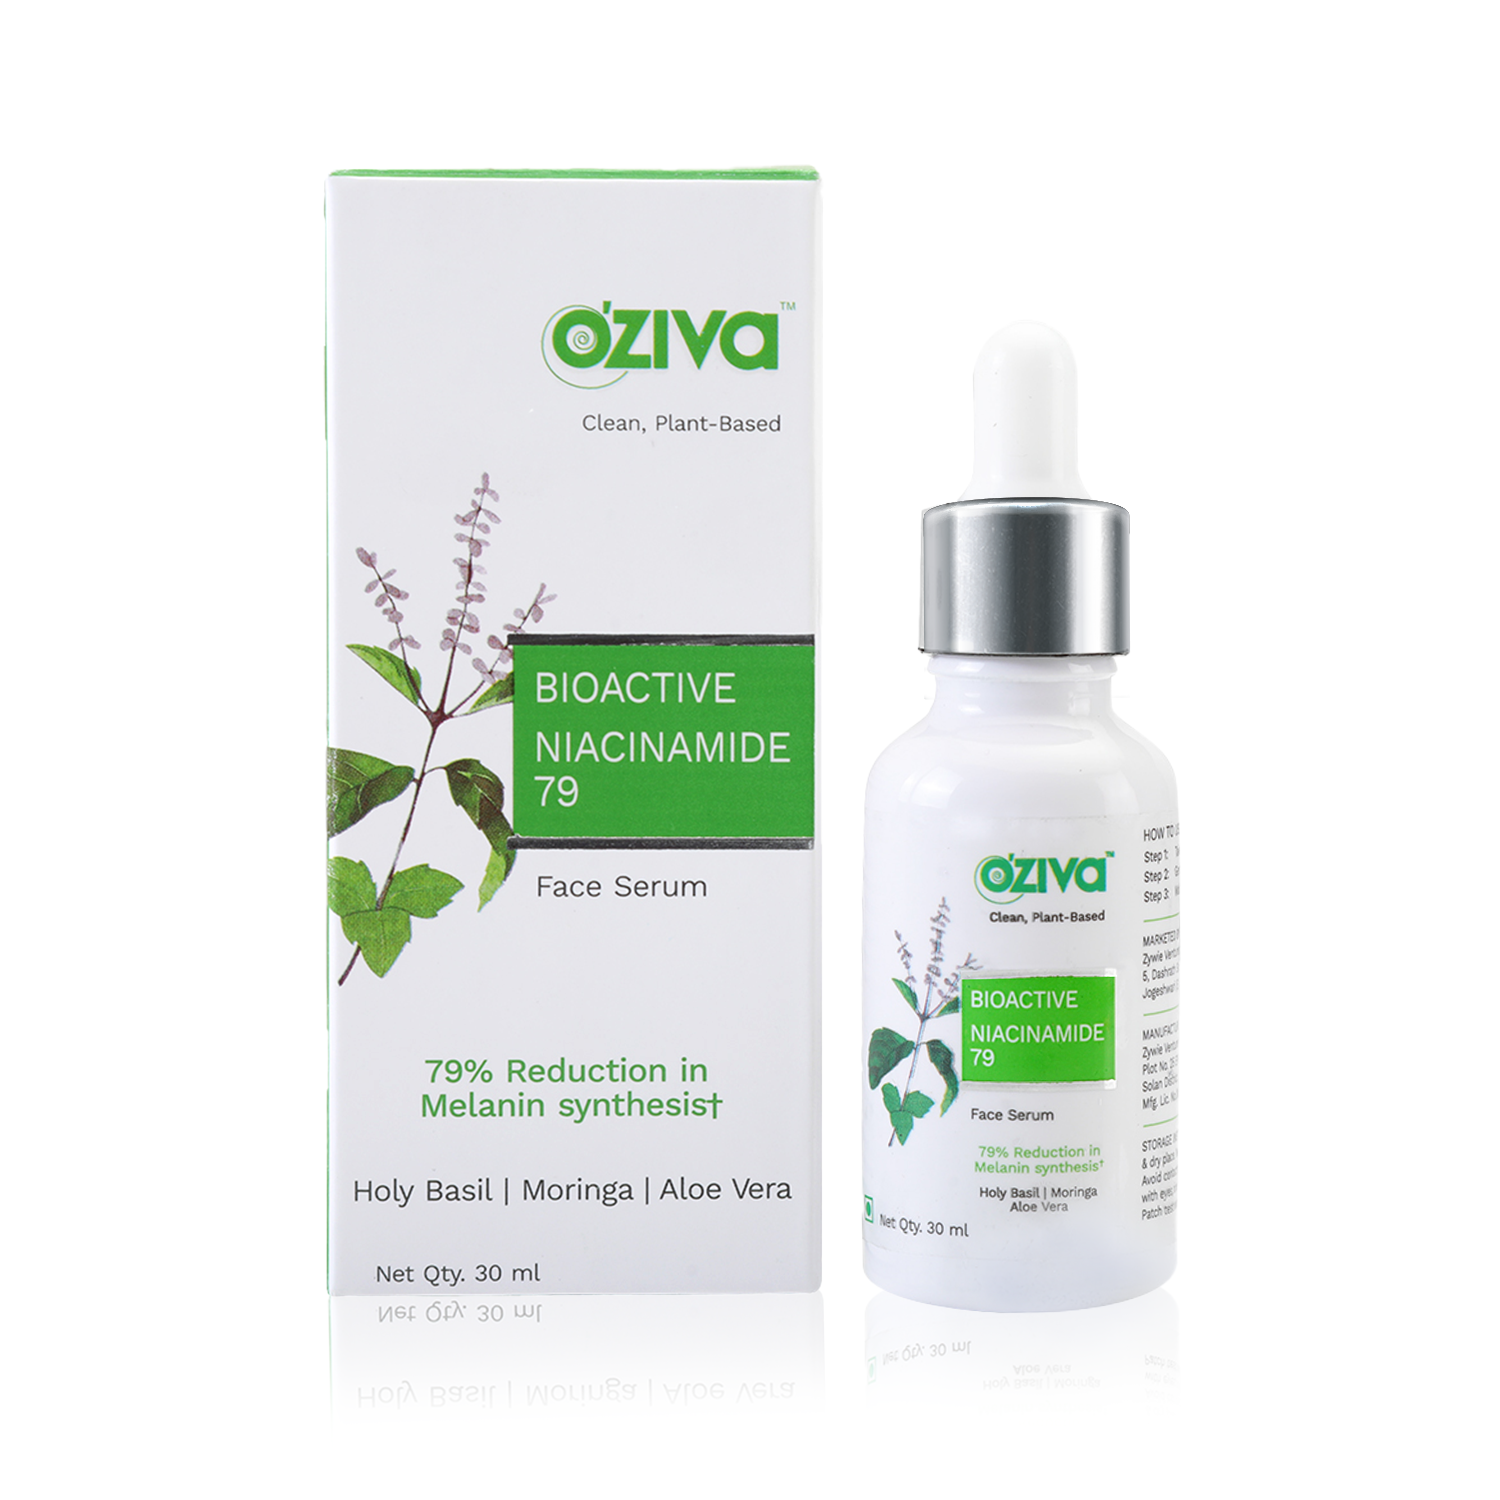 OZiva Bioactive Niacinamide79 Face Serum